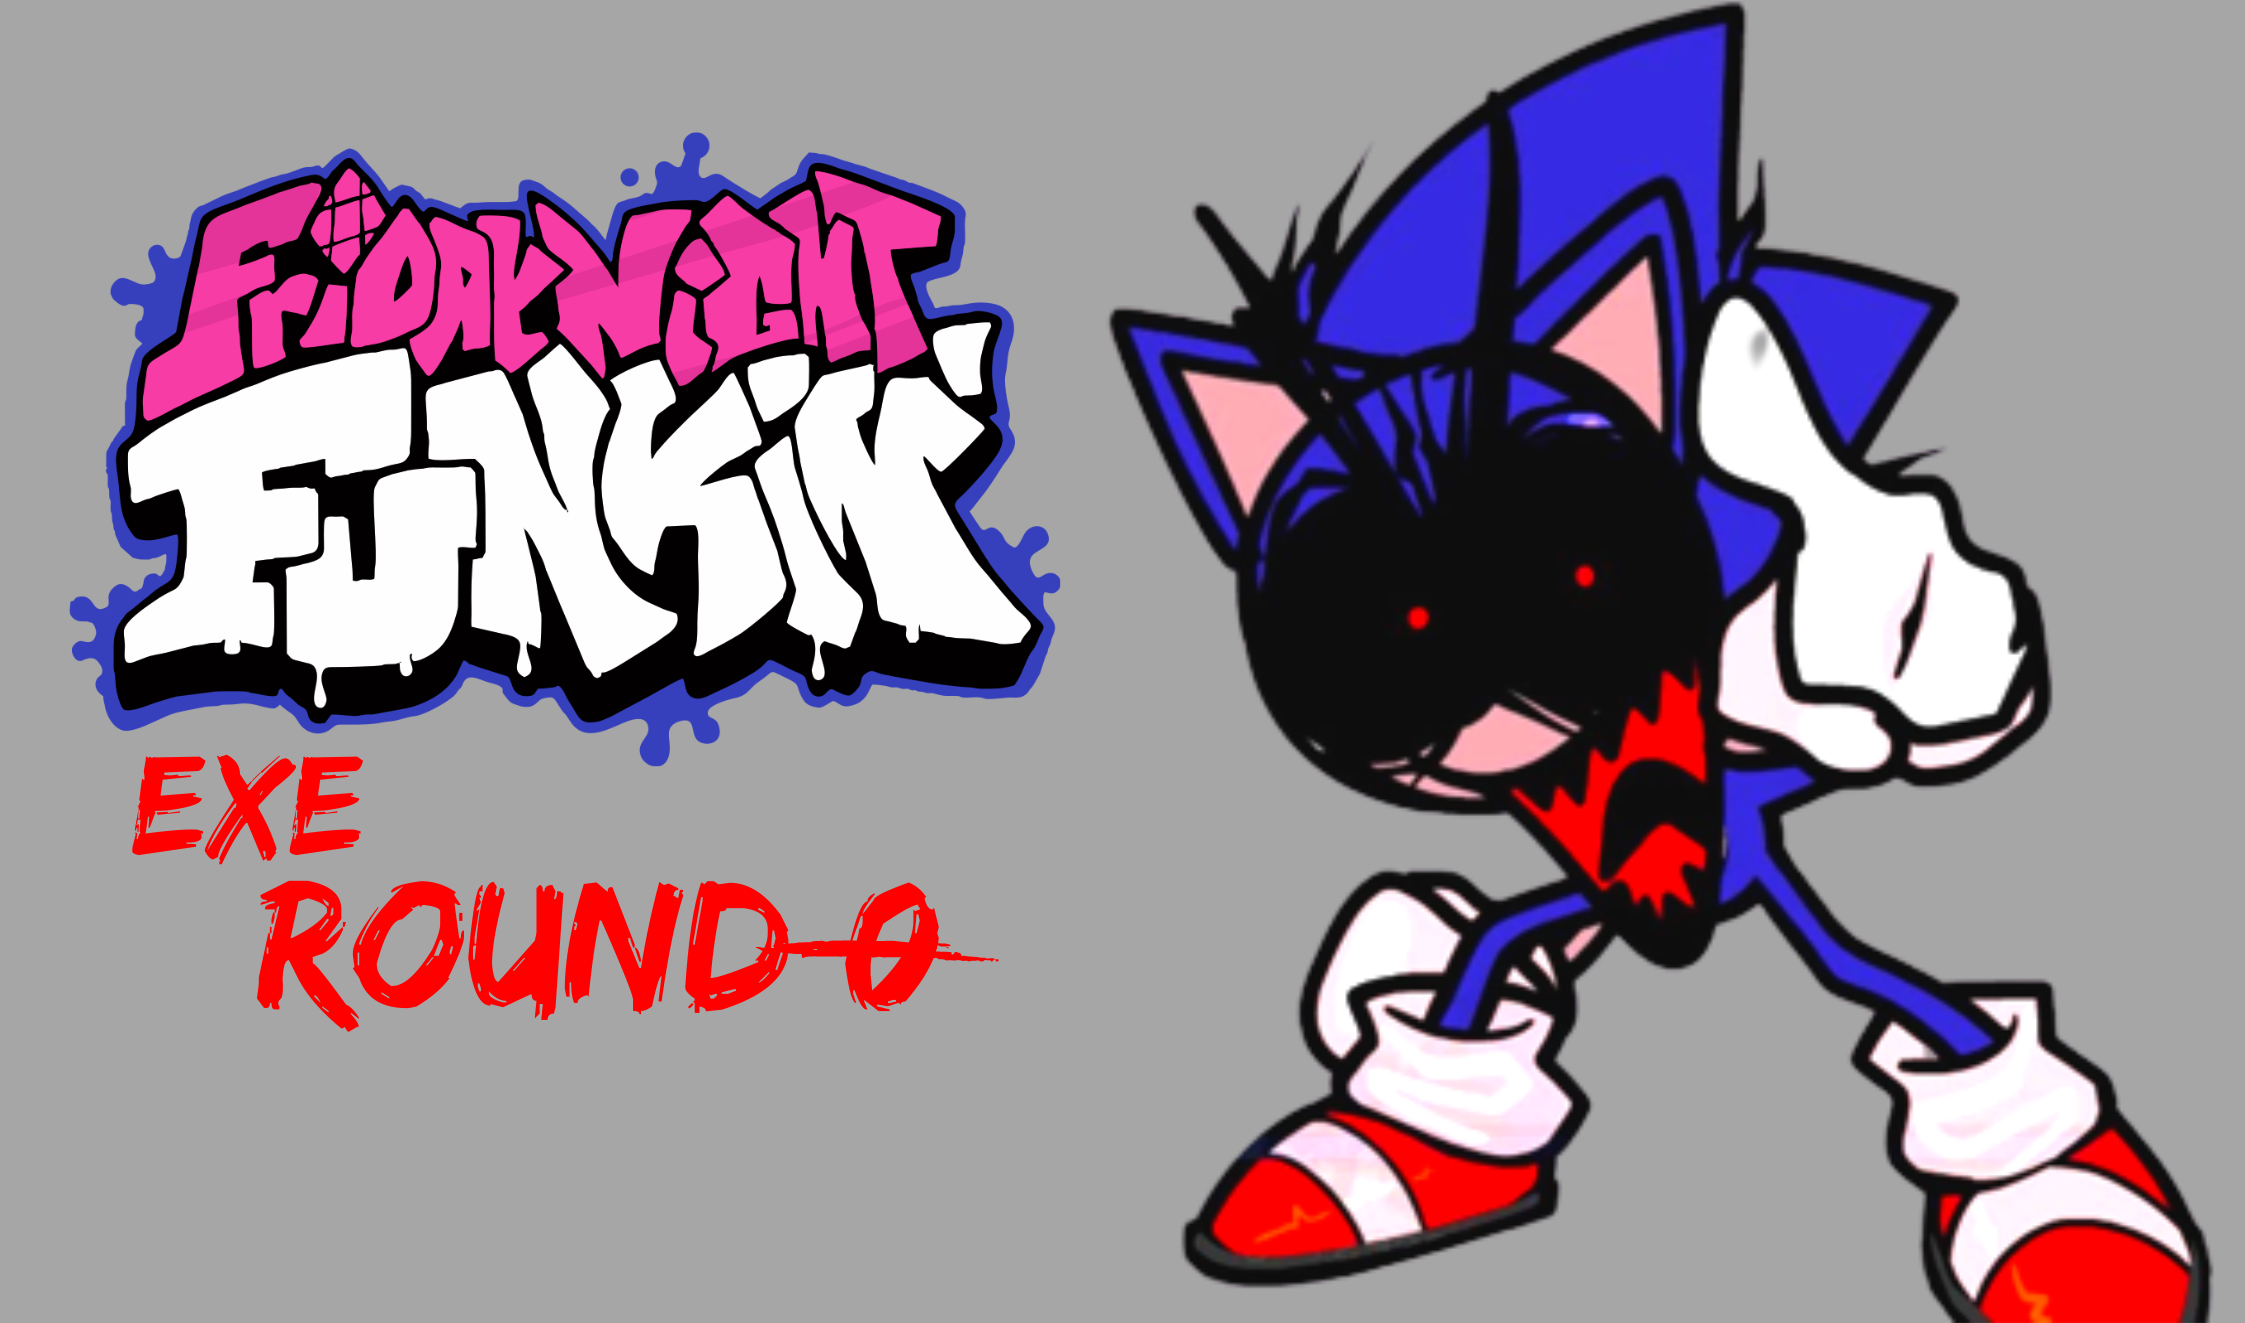 Friday Night Funkin: Sonic.EXE Zero Version Mod